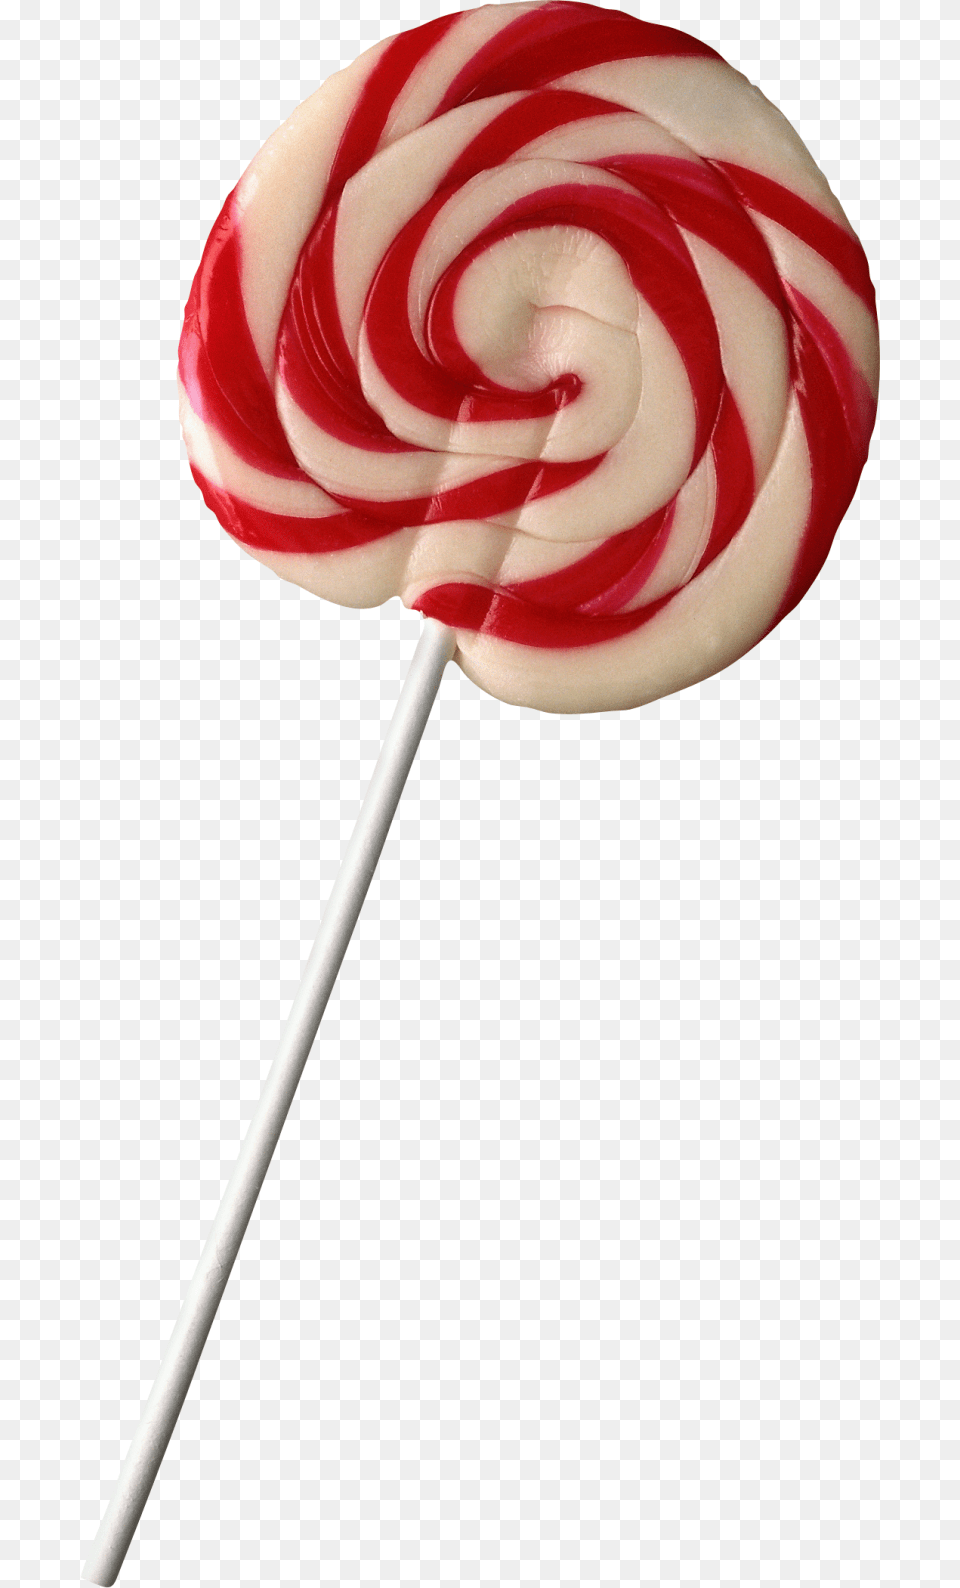 Lollipop Image Lollipop, Candy, Food, Sweets, Flower Free Transparent Png